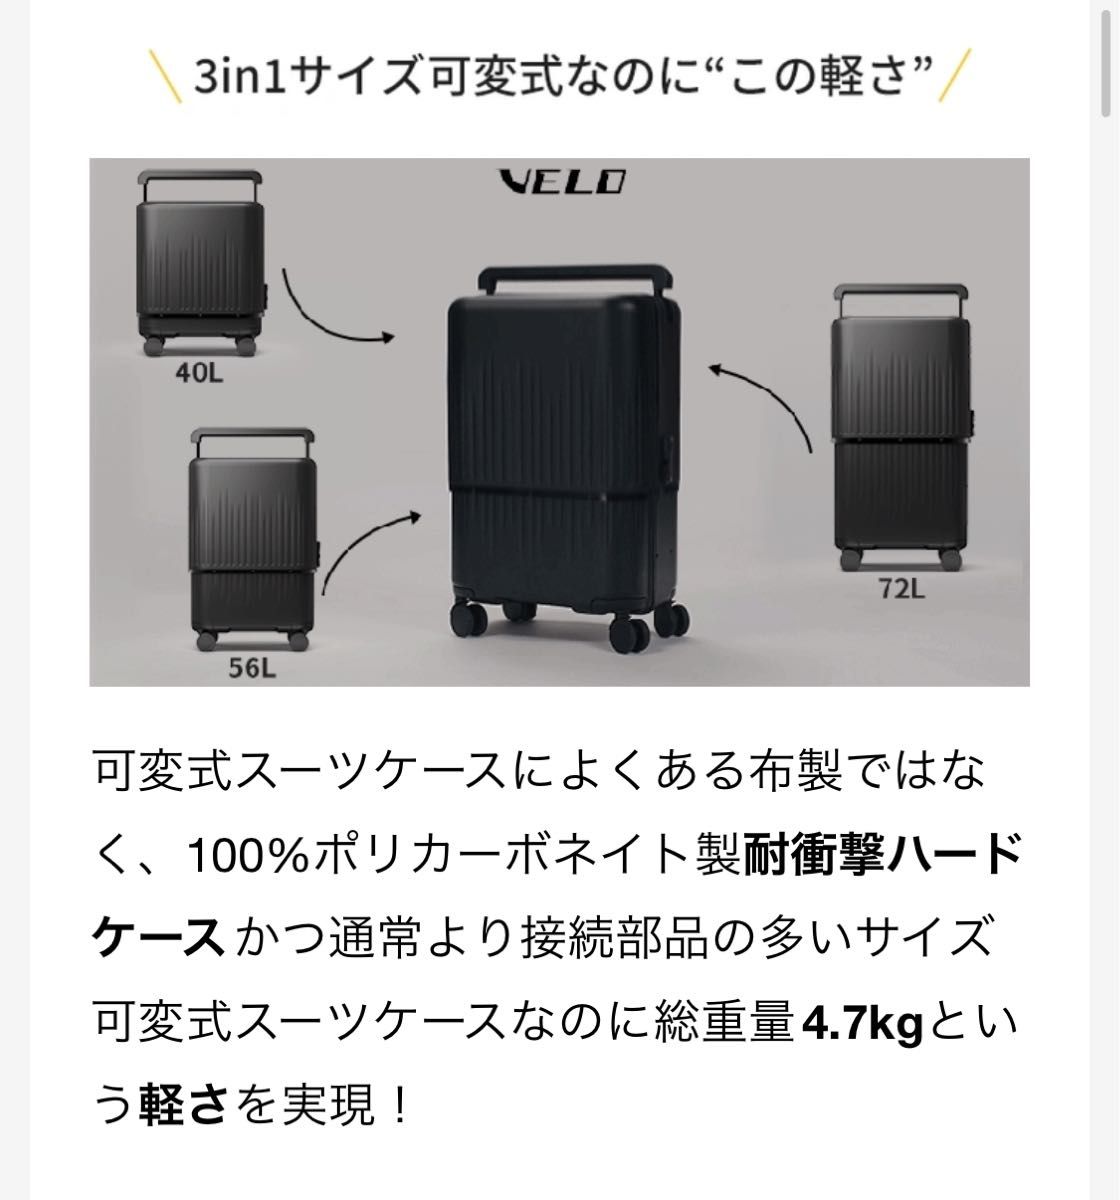 VELO スーツケース 三段階サイズ可変式 3in1スーツケース - 旅行かばん